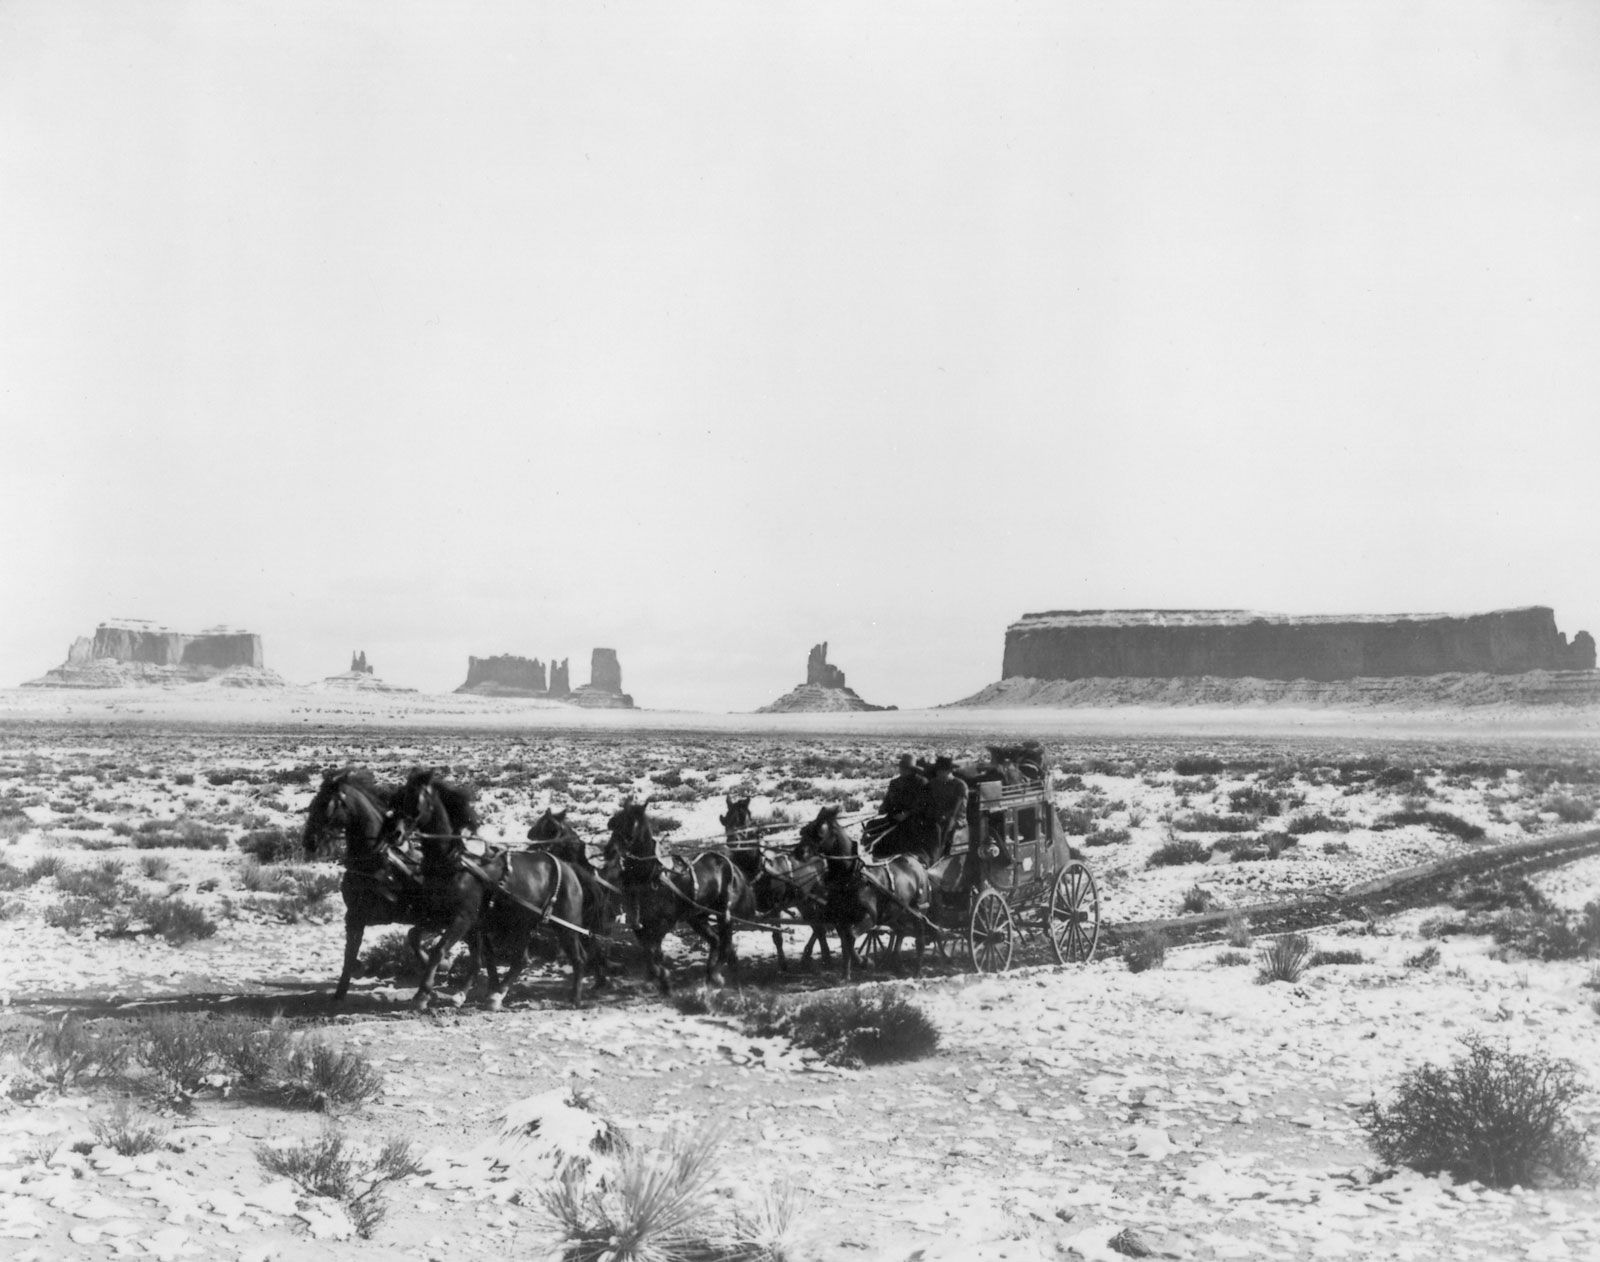 John-Ford-Scene-Stagecoach-Arizona-Monument-Valley.jpg